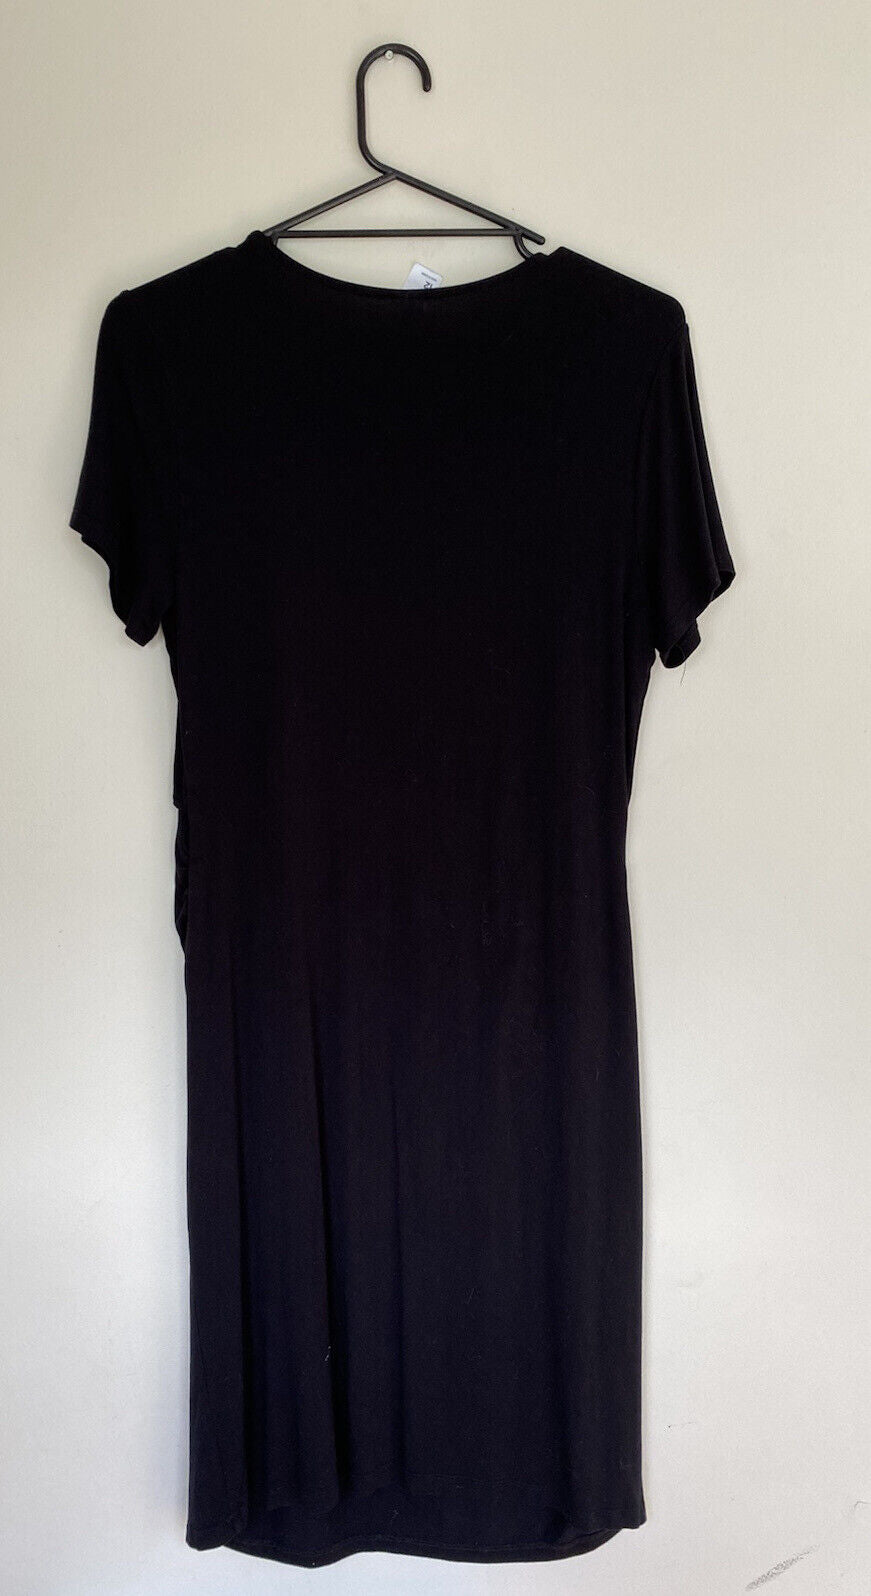 Anko Maternity Women's size 12 black short sleeve stretch dress, VGUC